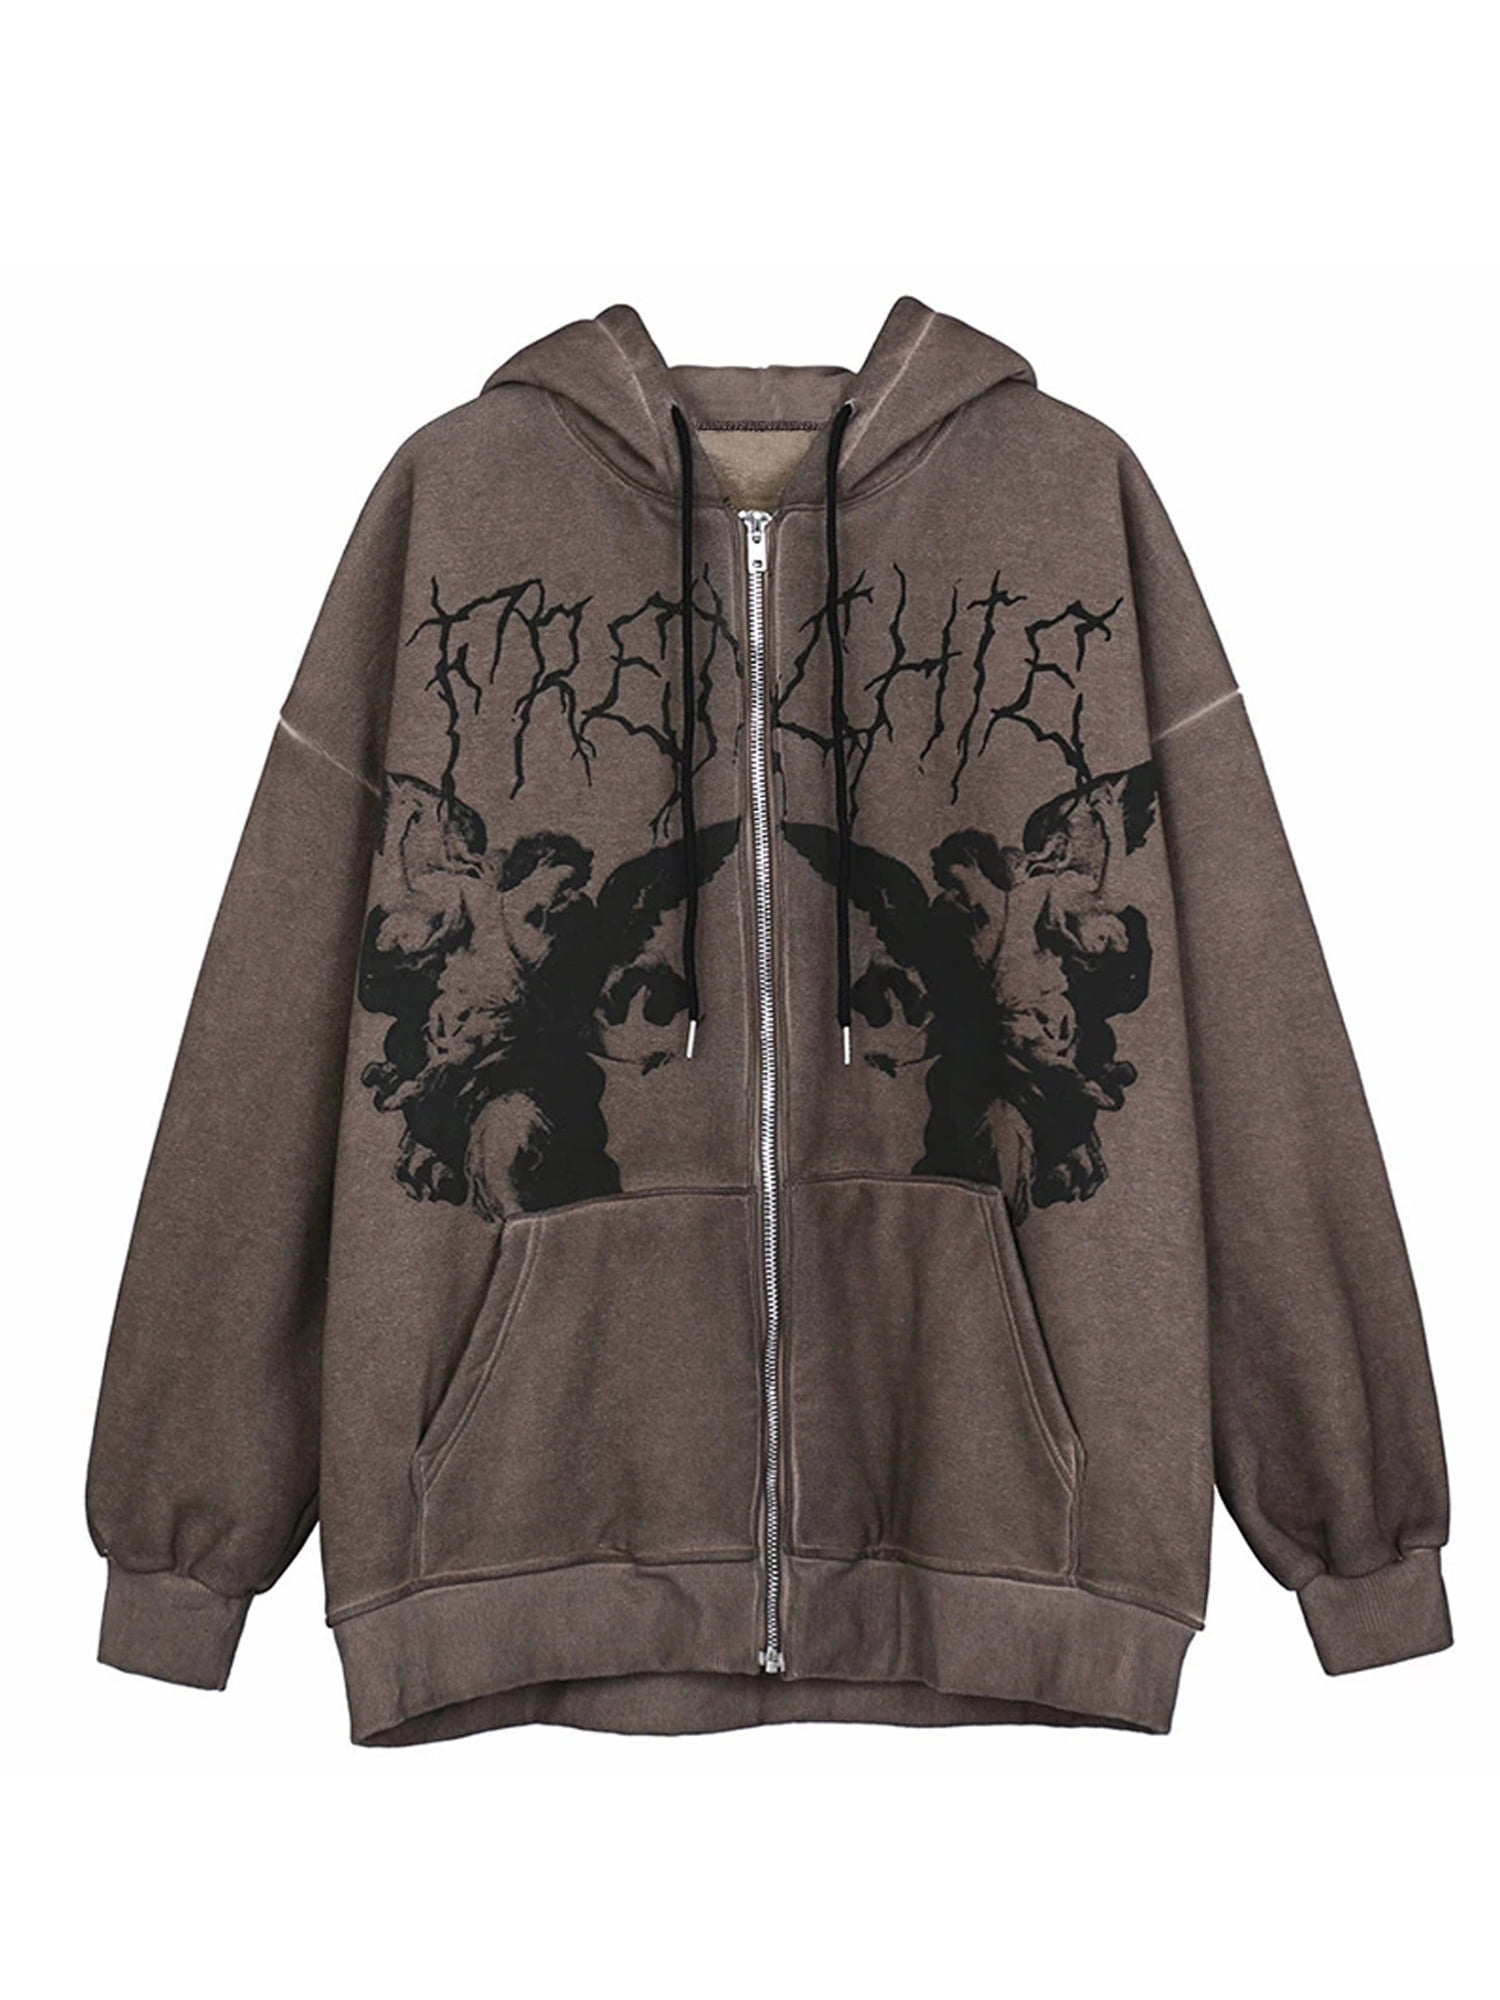 Zip up Hoodie Women Y2K Gothic Butterfly Print Sweatshirt Early Autumn Casual Pockets Tops Long Sleeve Jacket 